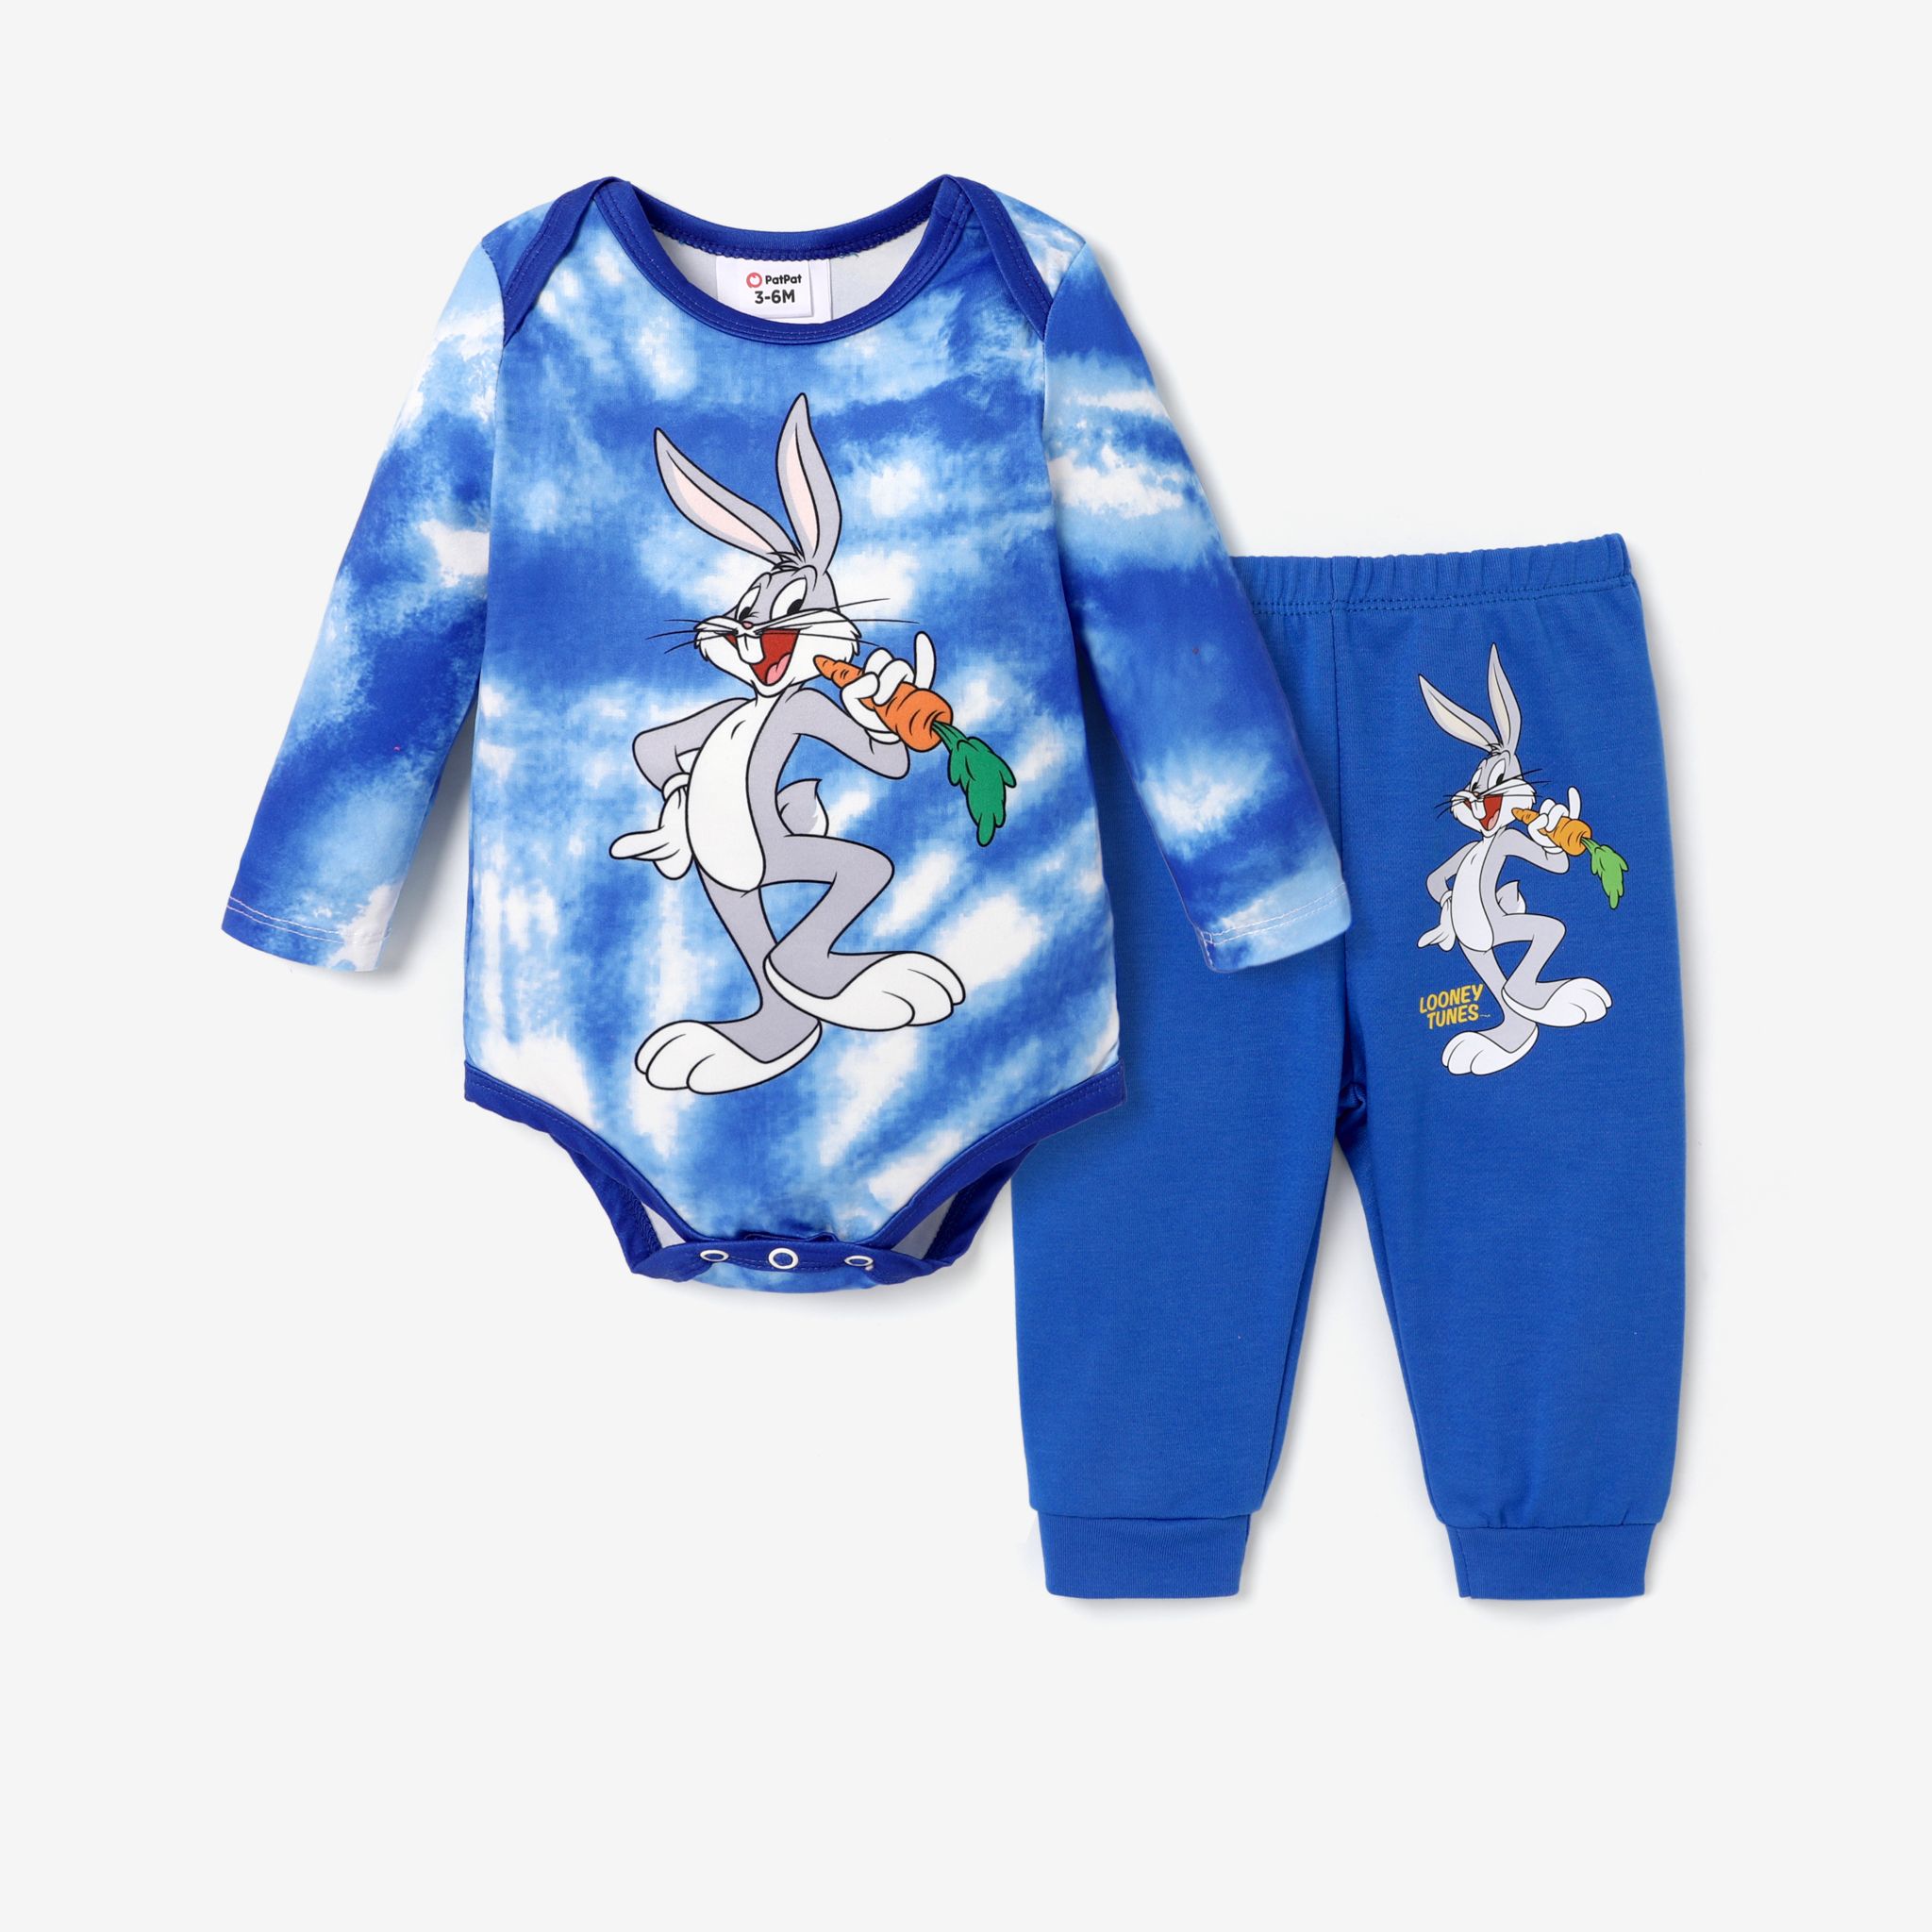 Looney Tunes Baby Boy/Girl Character Print Long Sleeve Top And Pants Set